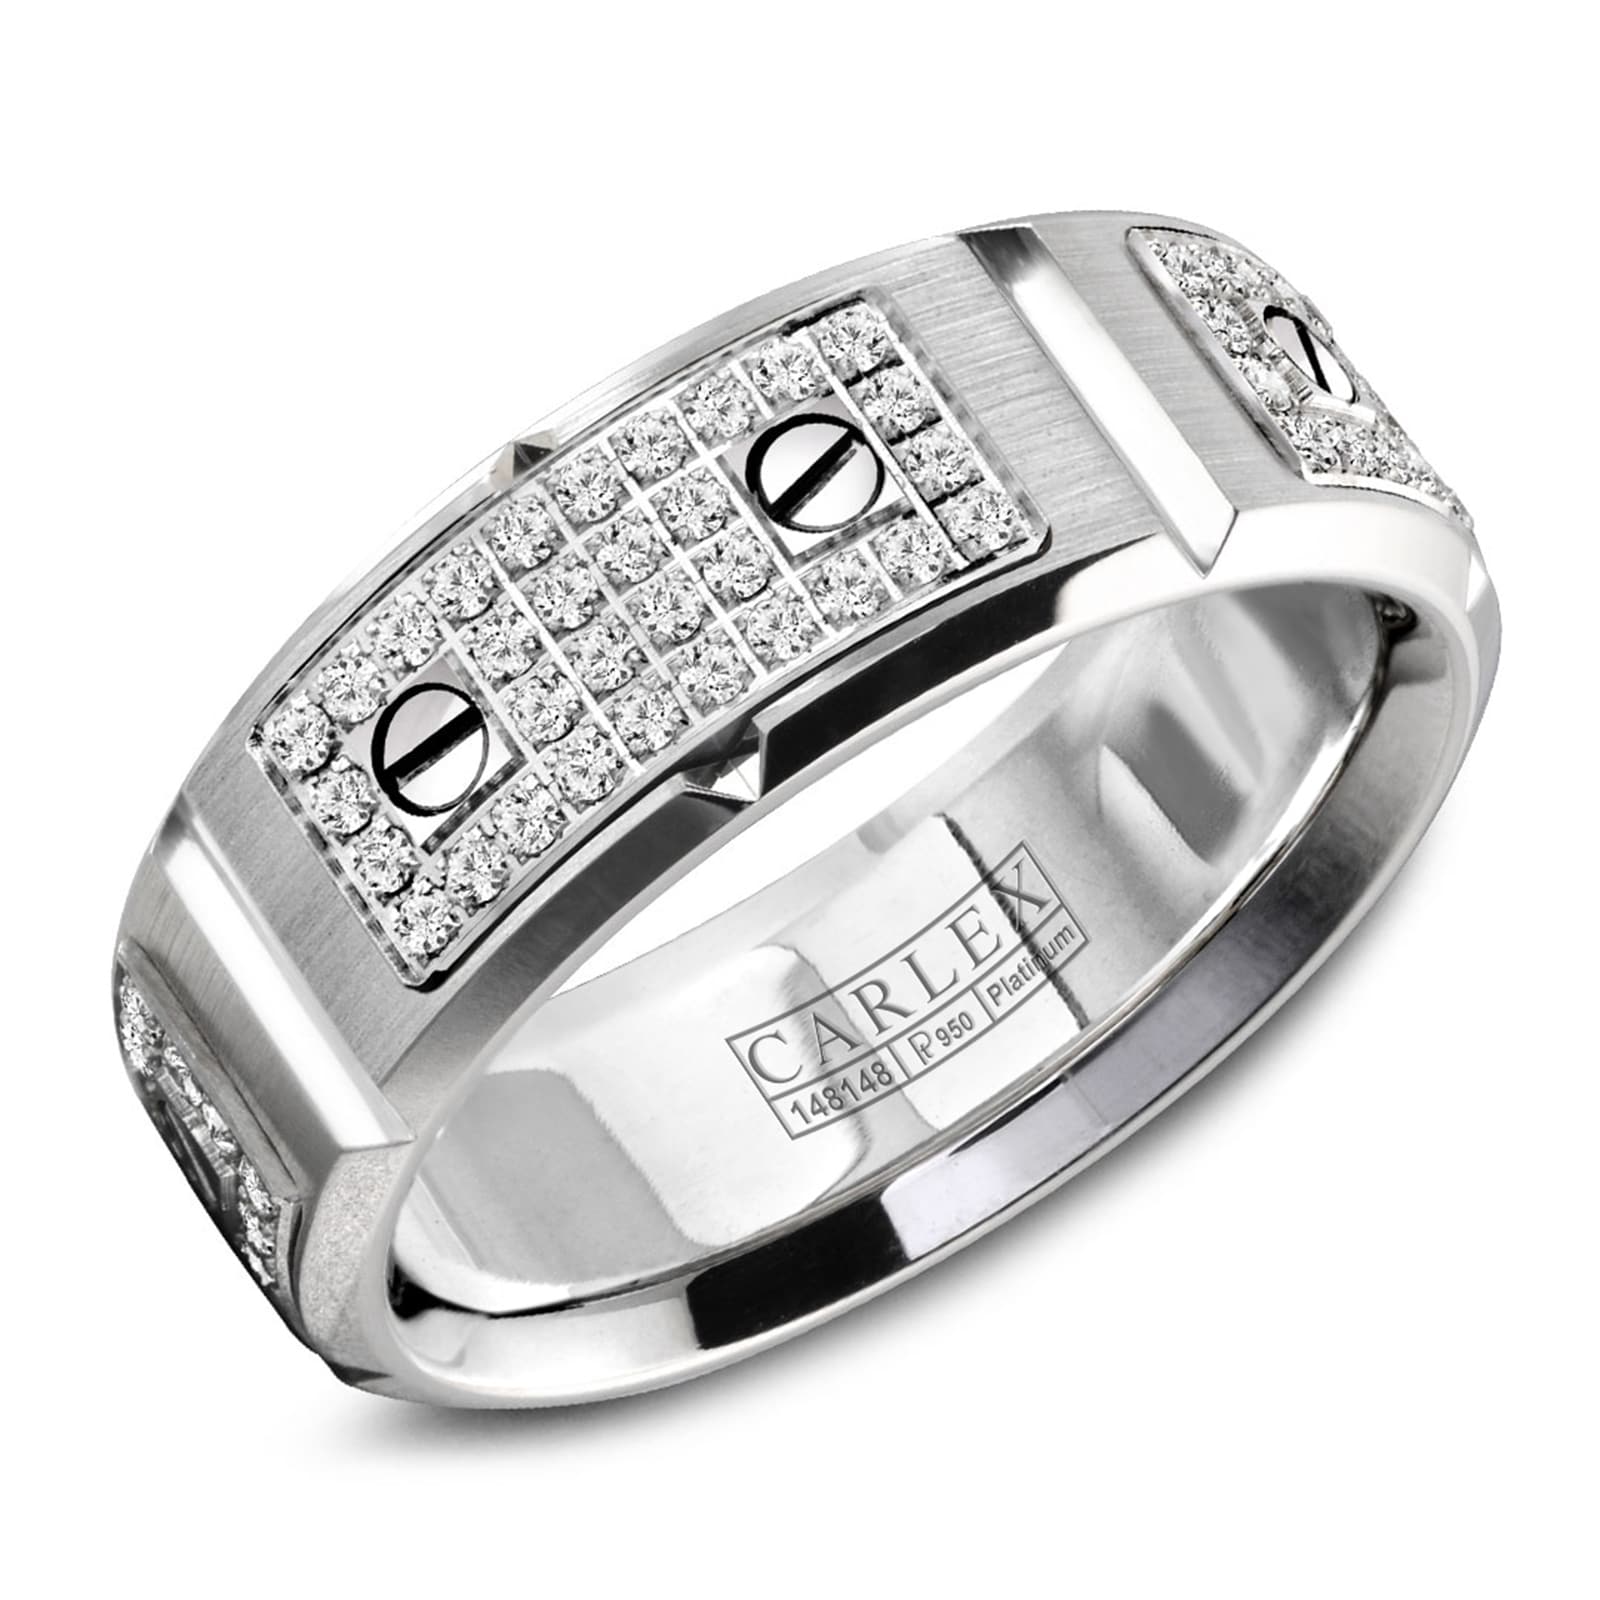 PROMESSA 950 Platinum Ring - 92381R | Chow Sang Sang Jewellery